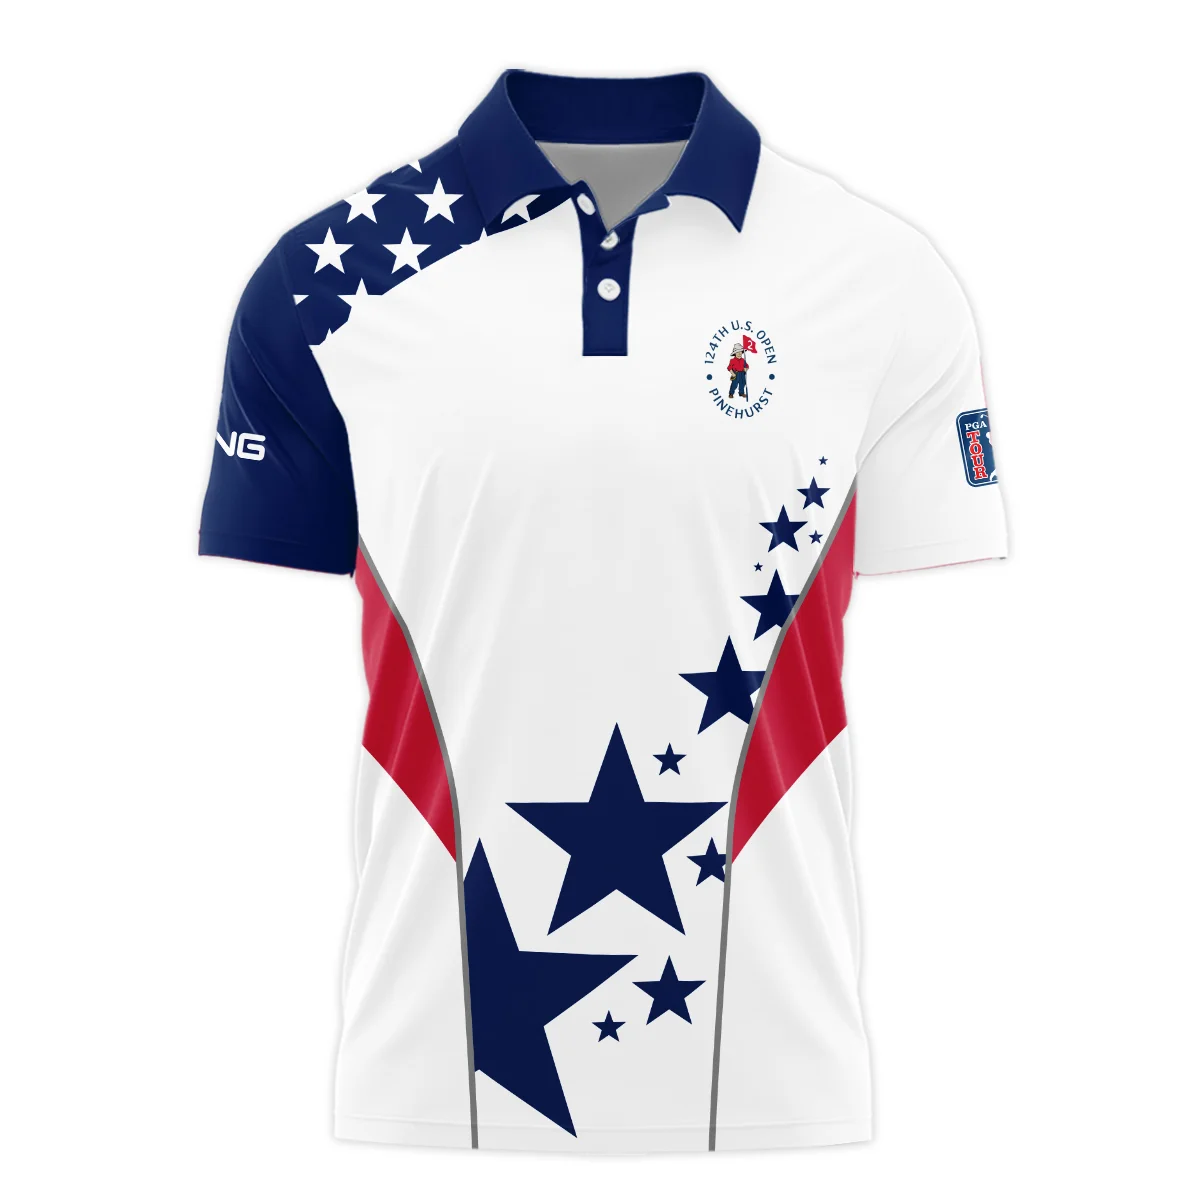 124th U.S. Open Pinehurst Ping Stars US Flag White Blue Polo Shirt Style Classic Polo Shirt For Men